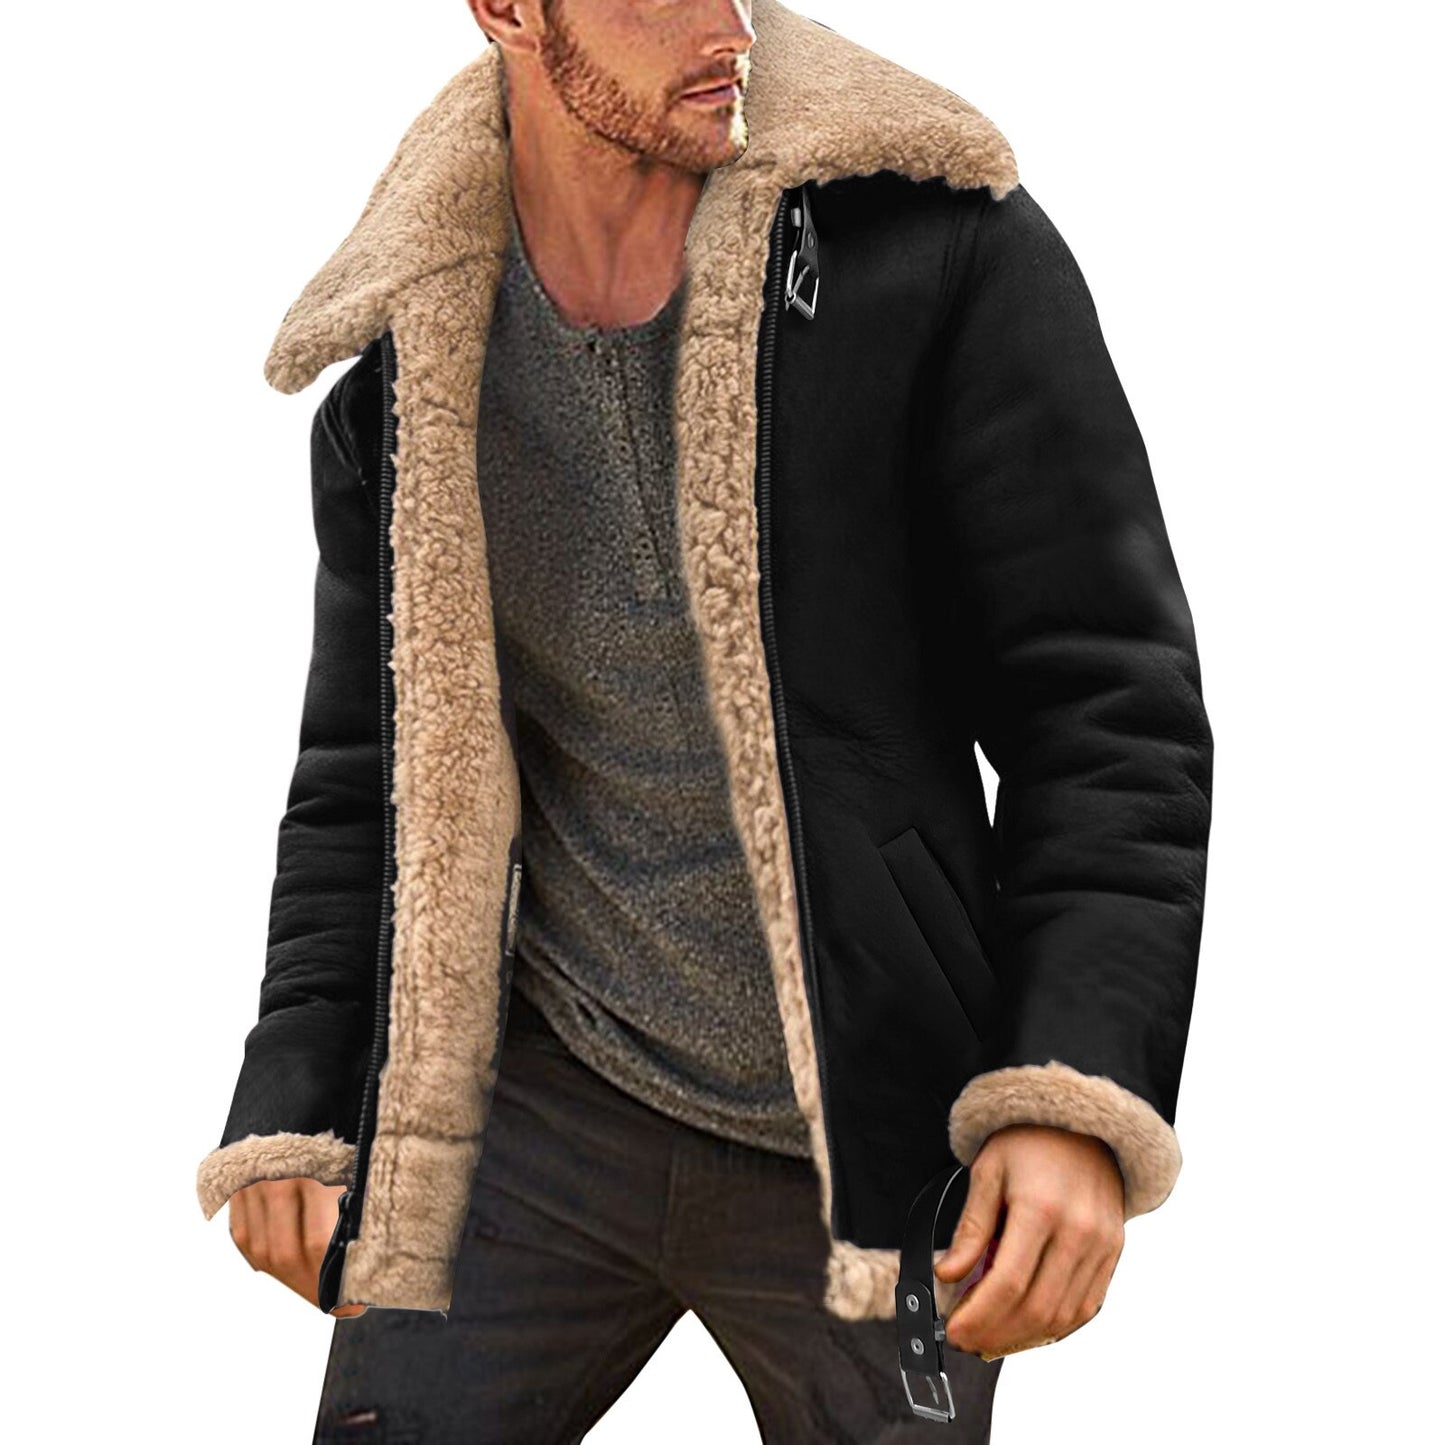 Men's Stylish Winter Jackets